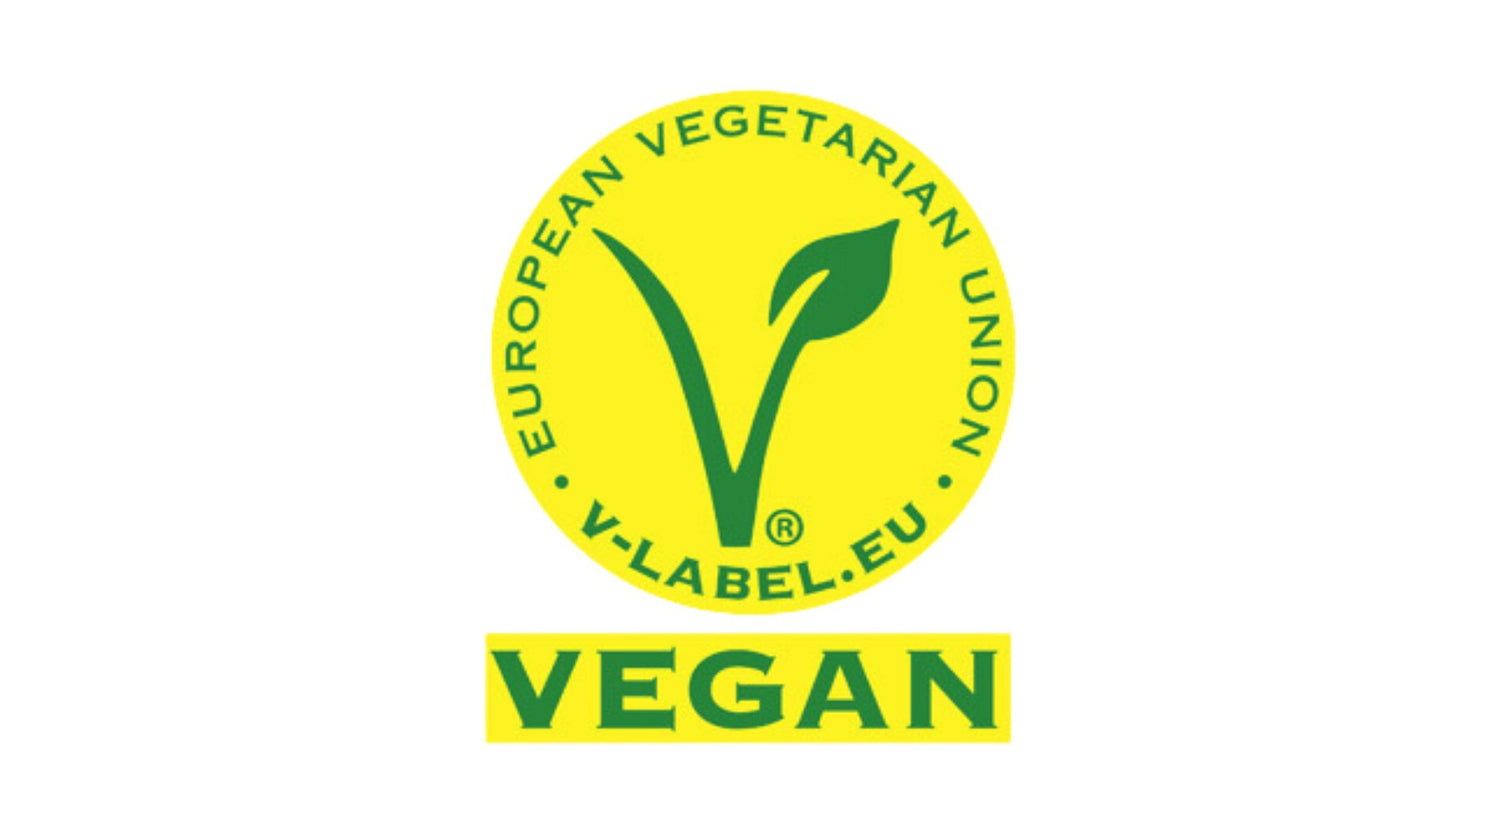 Vegansk certificering i gul med grøn skrift